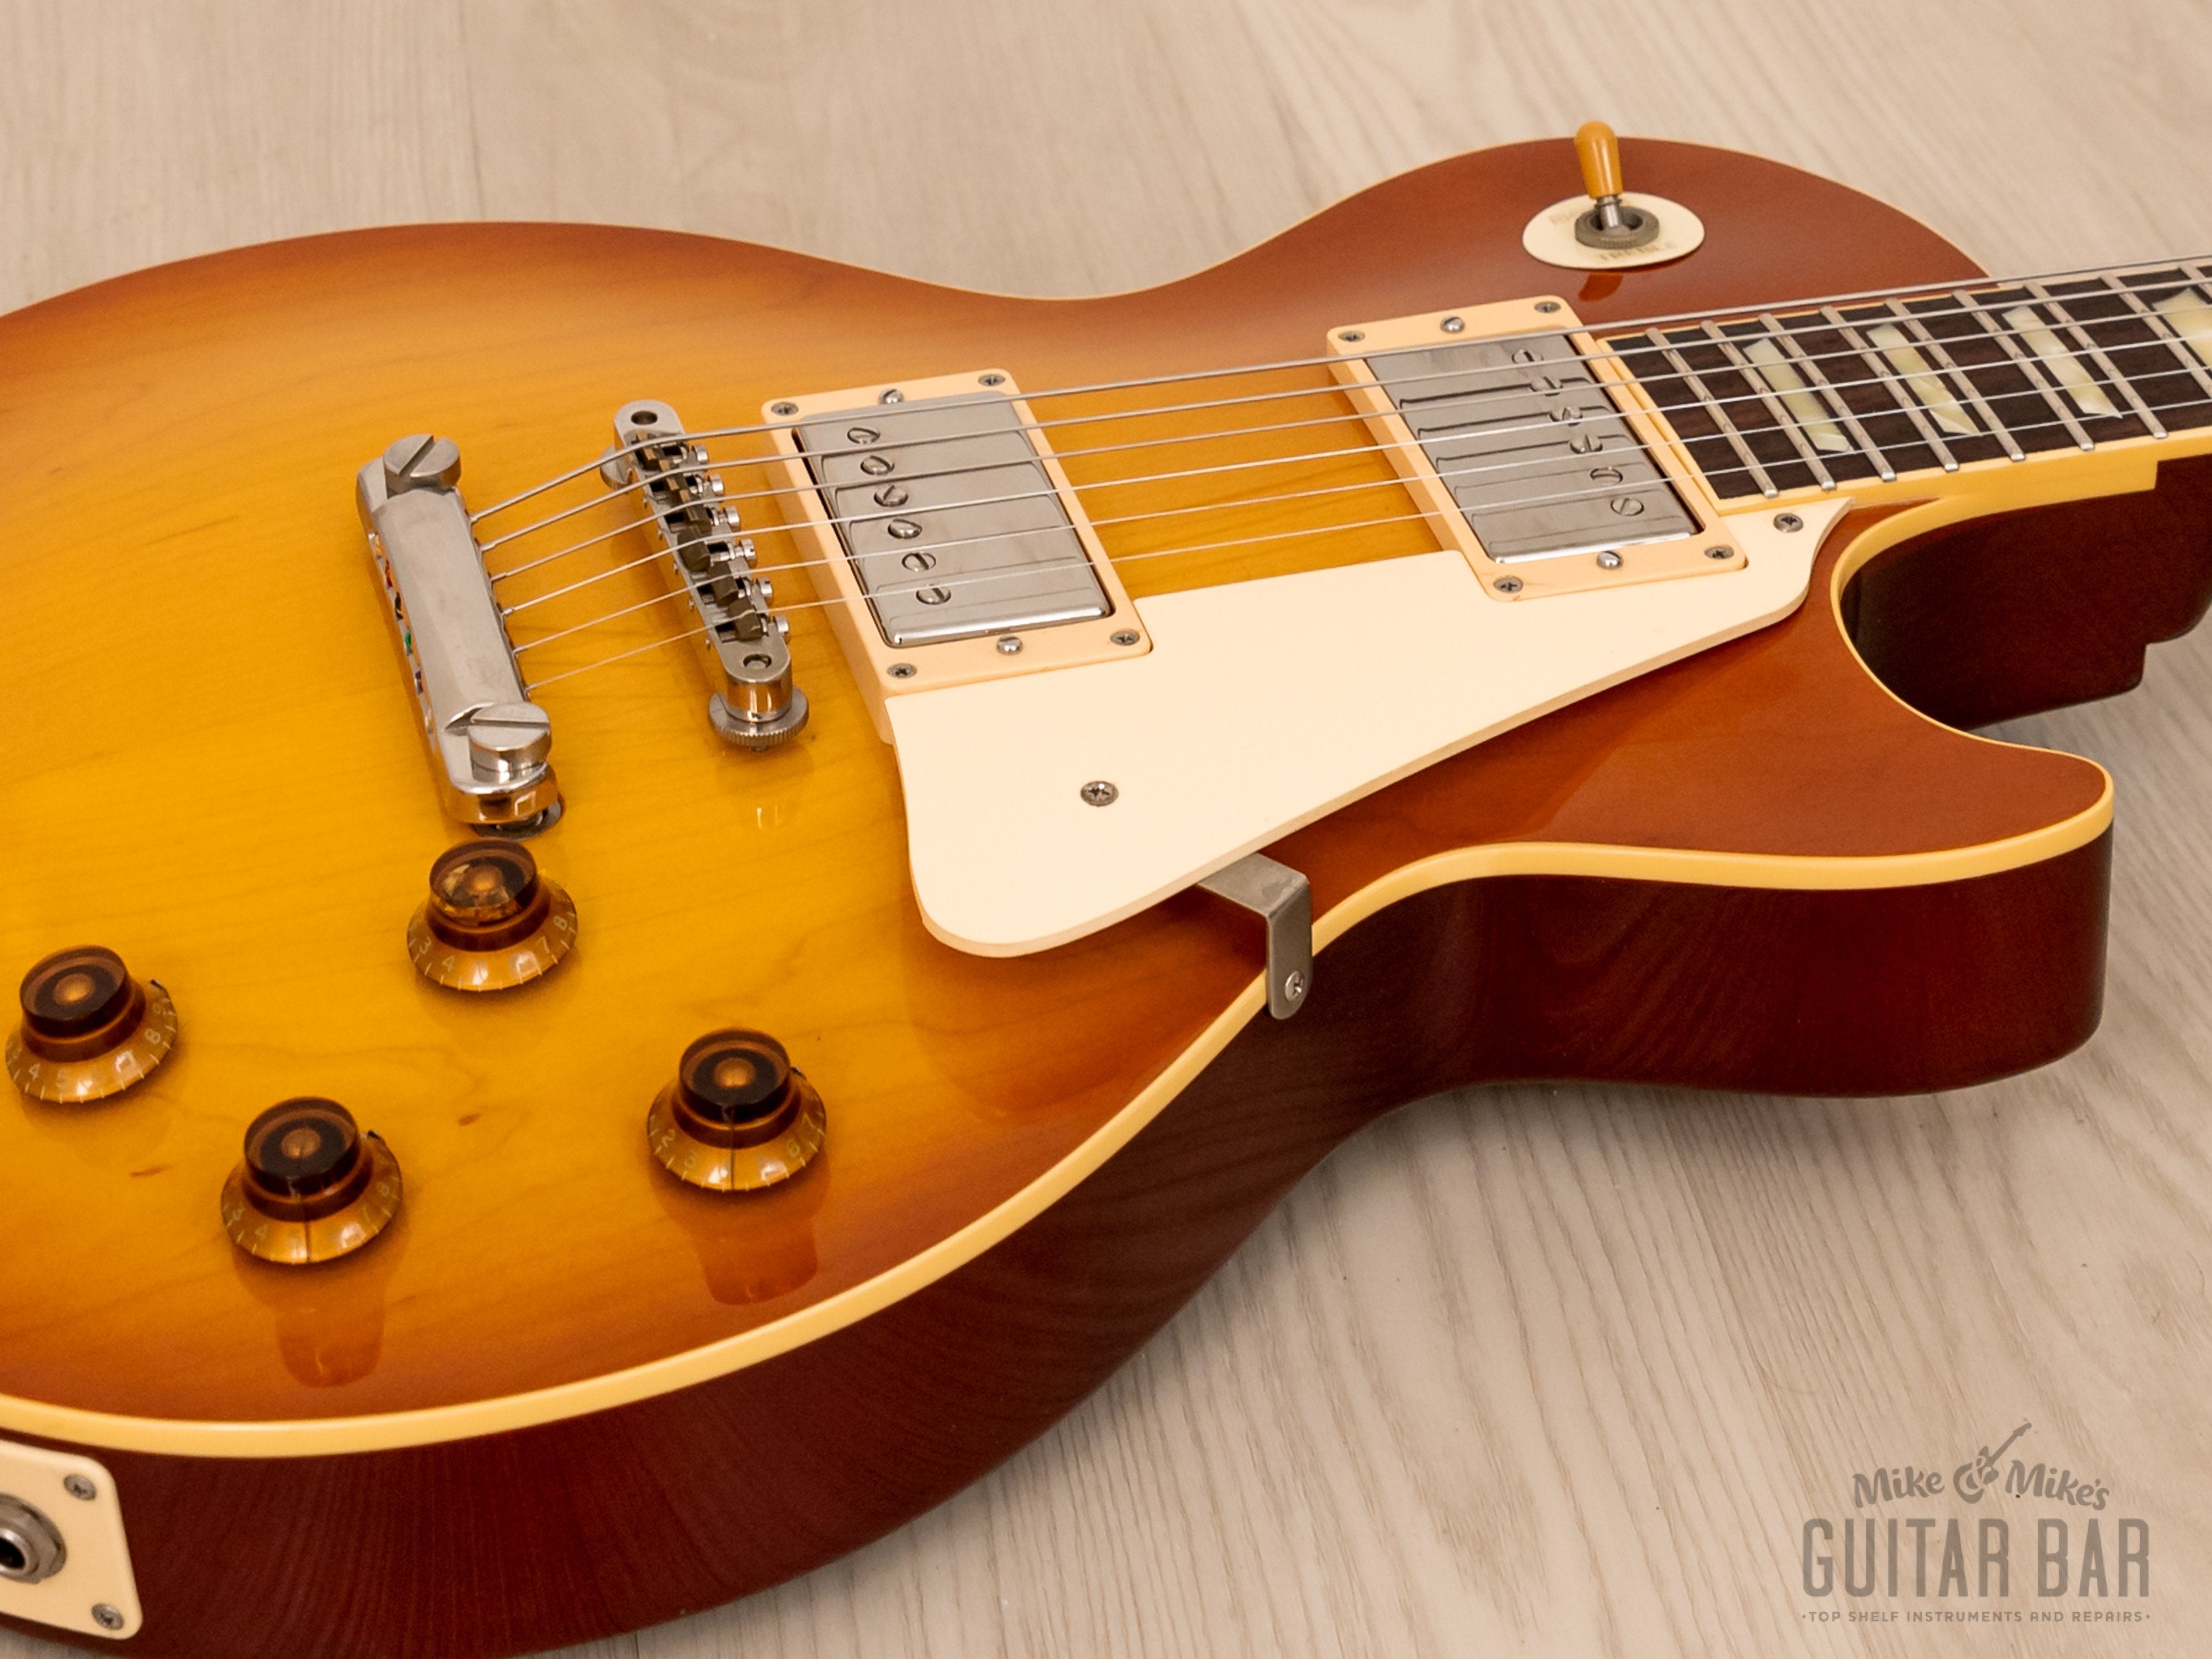 2011 Tokai Love Rock LS160 Standard Plain Top Burst Lacquer w/ Gibson Burstbucker PAFs, Japan